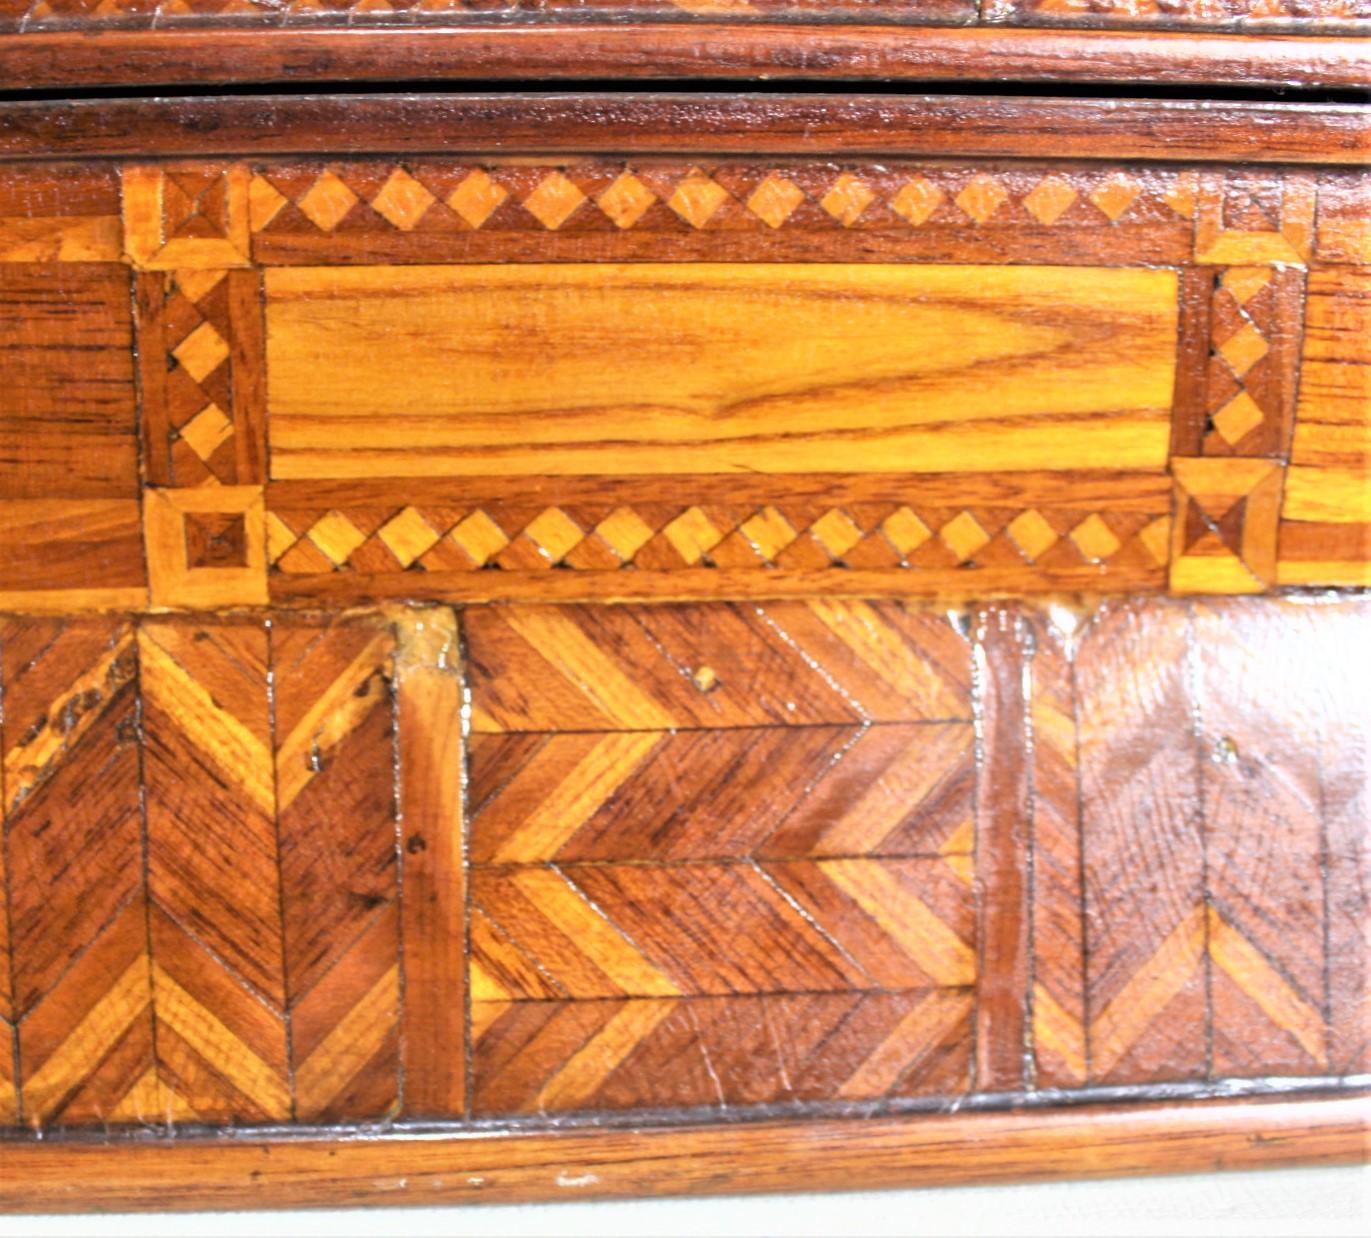 Superb Antique Folk Art Parquetry Casket Styled Writing Box or Lap Desk For Sale 12